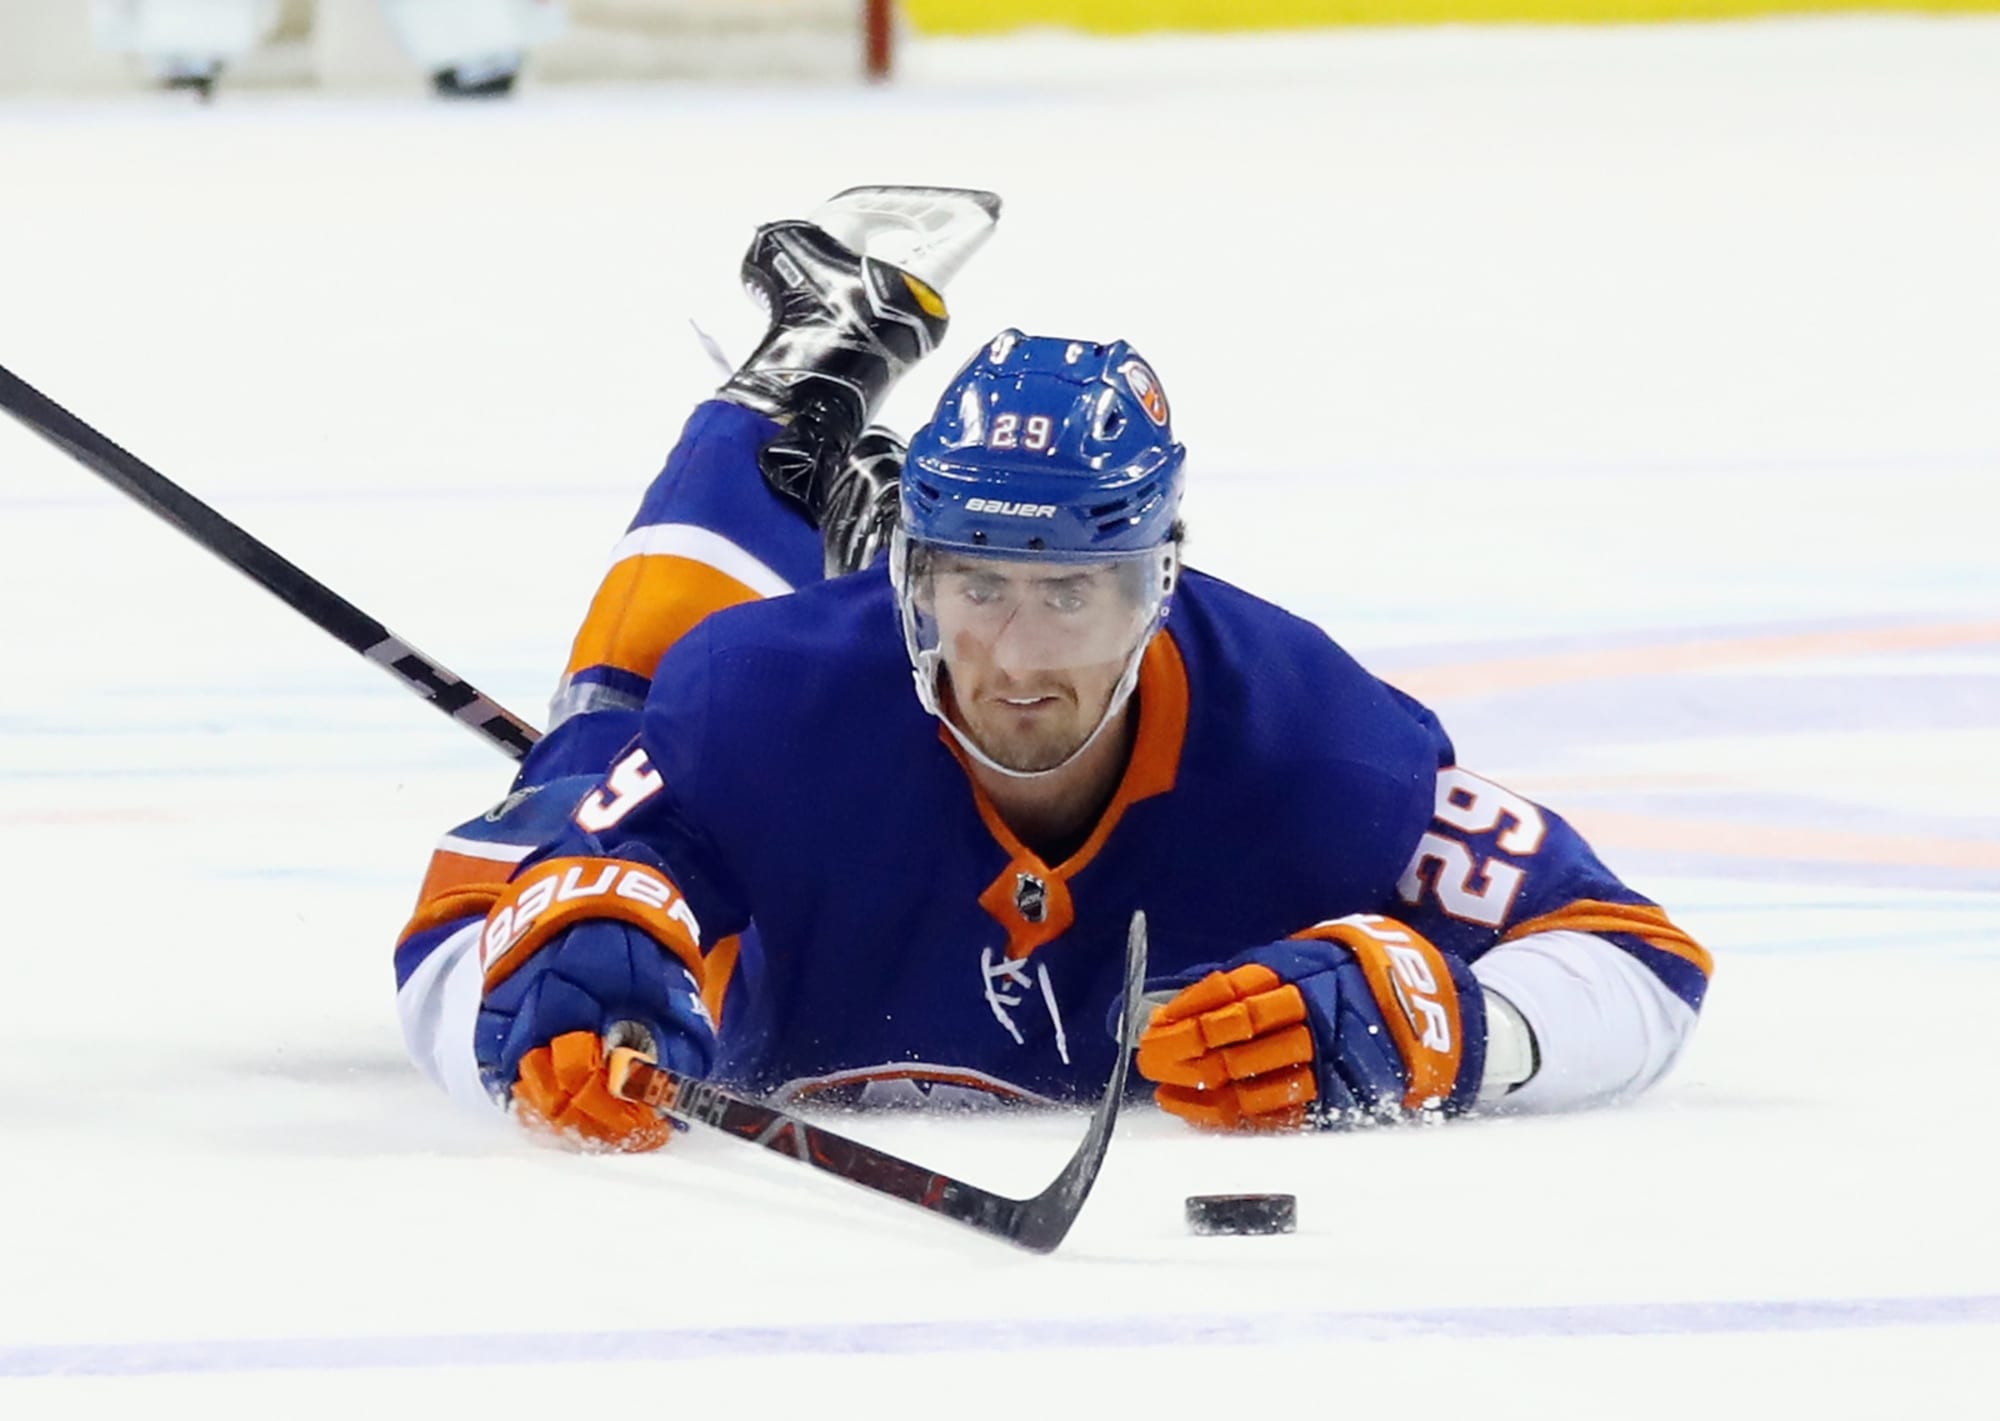 Brock Nelson 29 New York Islanders ice hockey player poster shirt